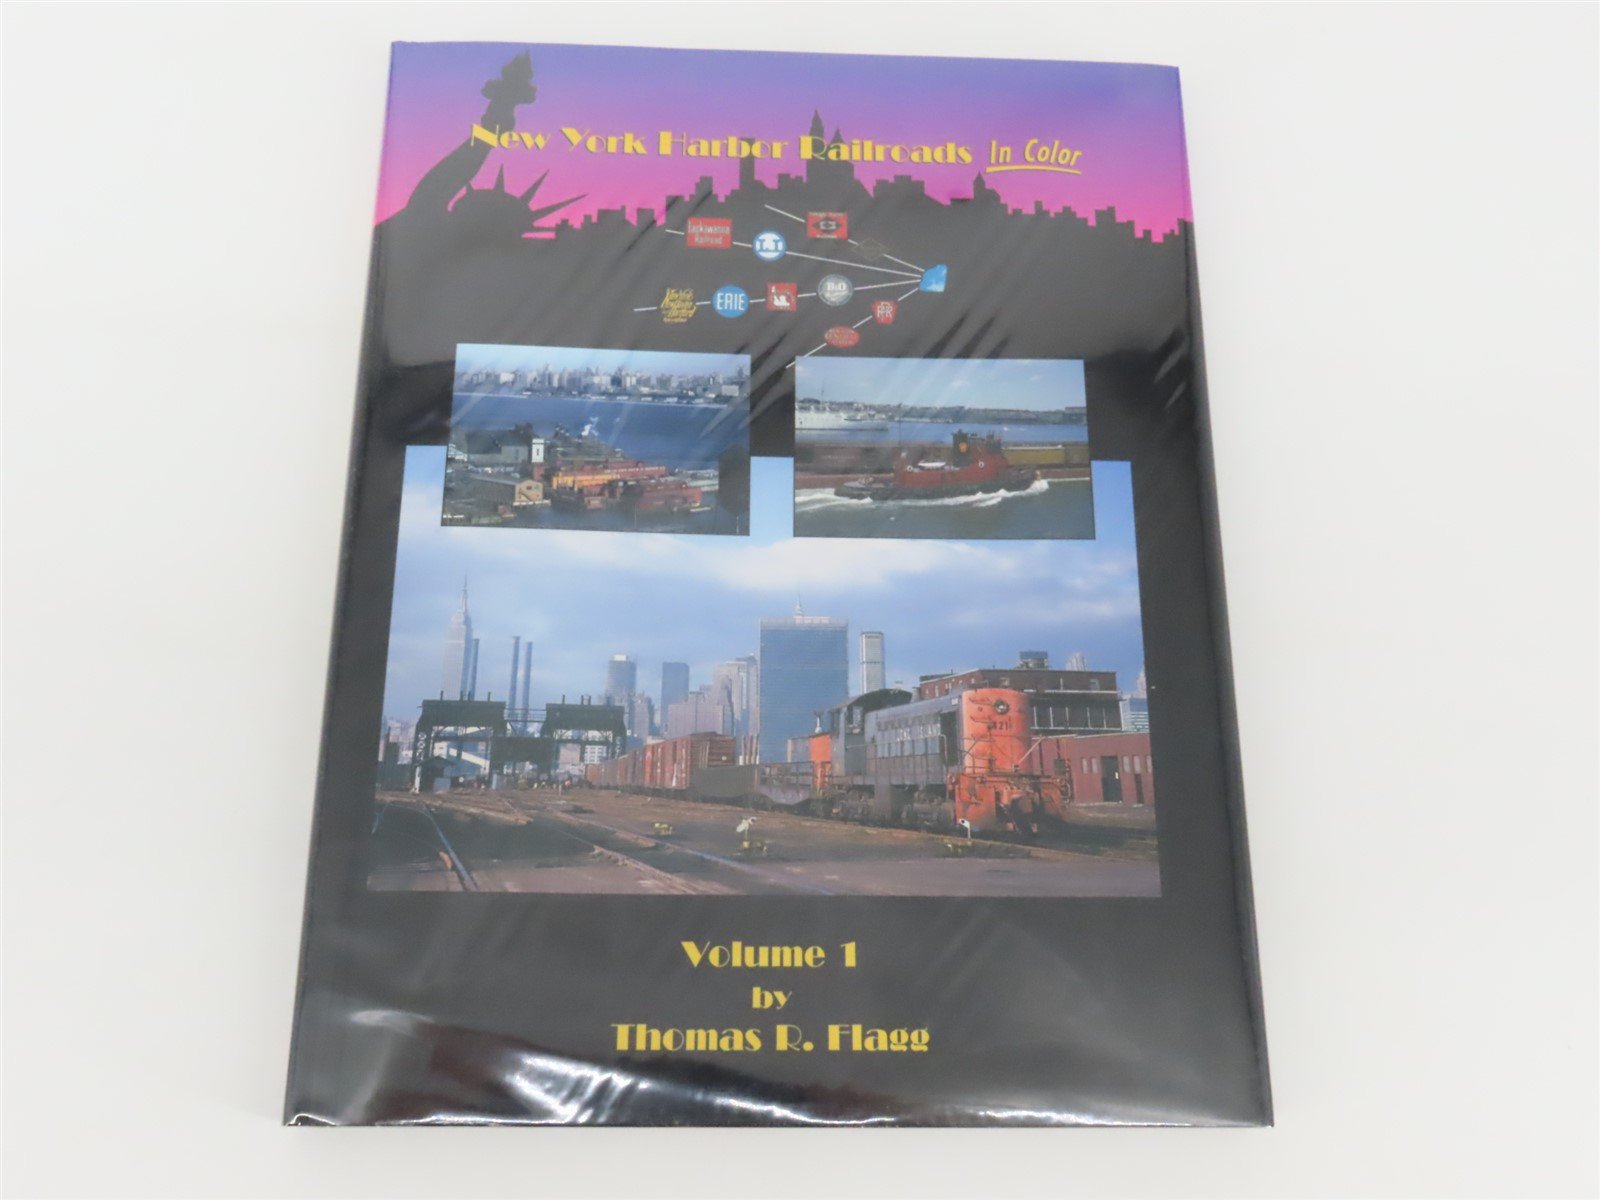 Morning Sun: New York Harbor Railroads Volume 1 by Thomas R. Flagg ©2000 HC Book